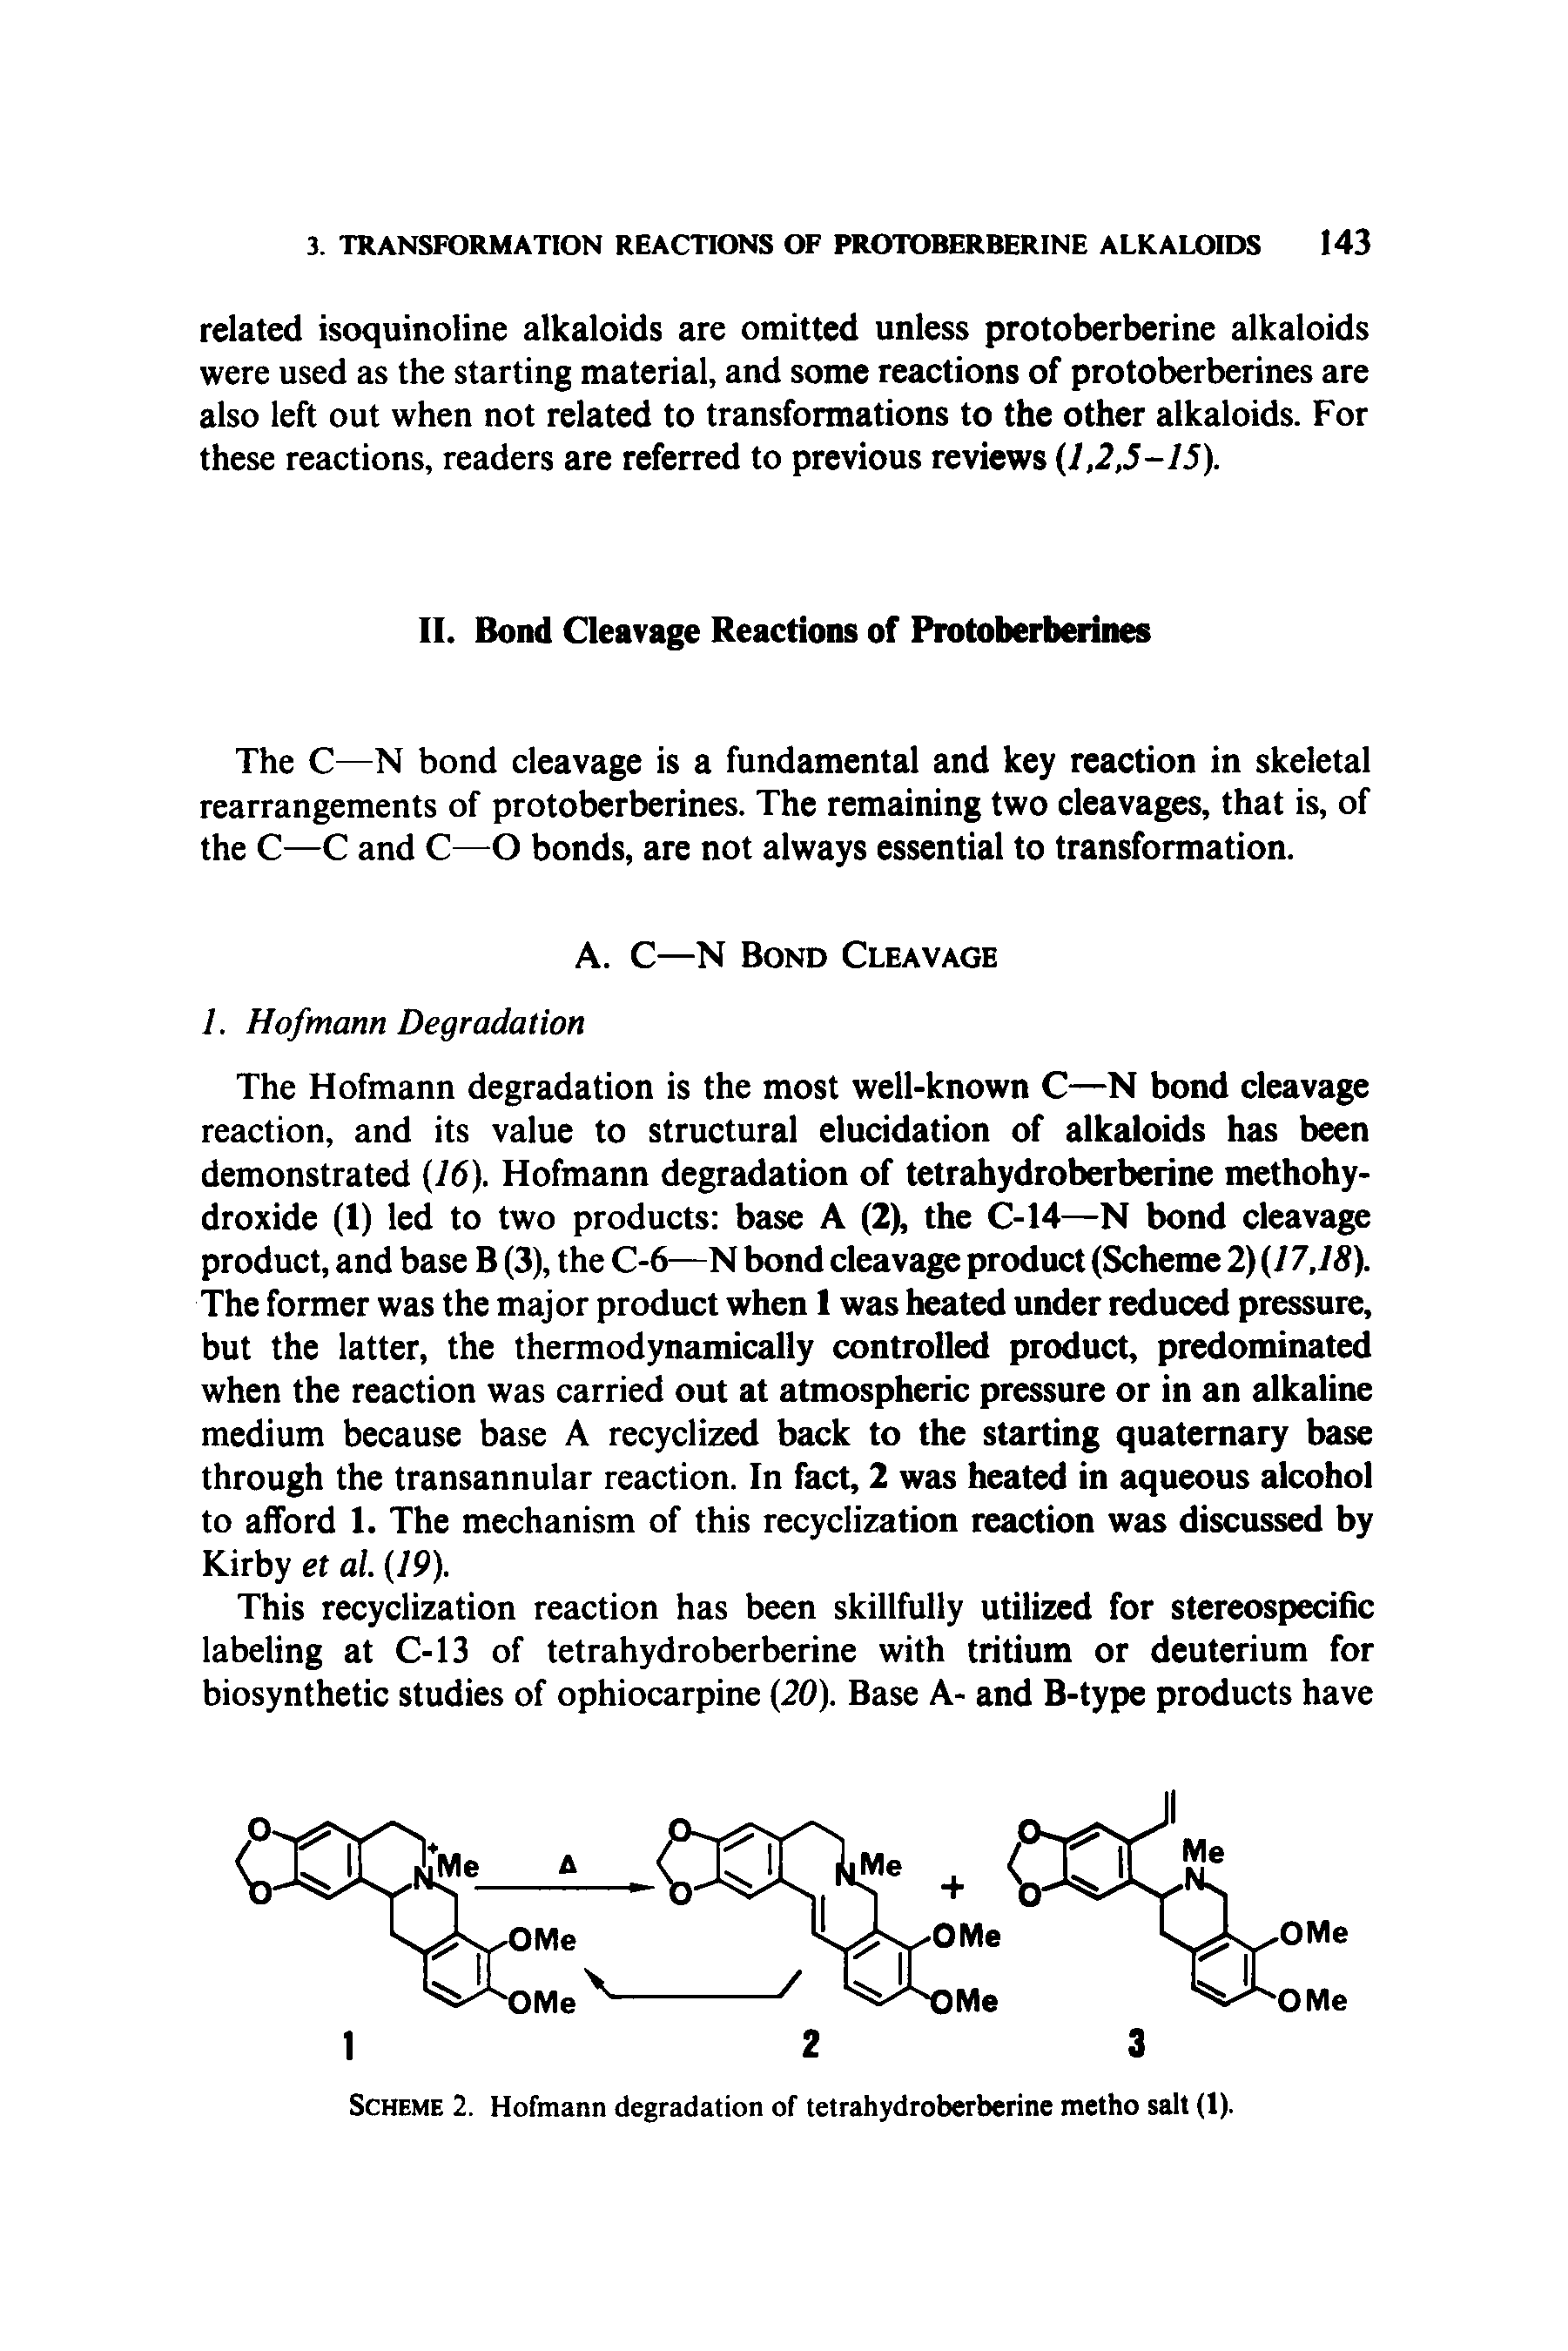 Scheme 2. Hofmann degradation of tetrahydroberberine metho salt (1).